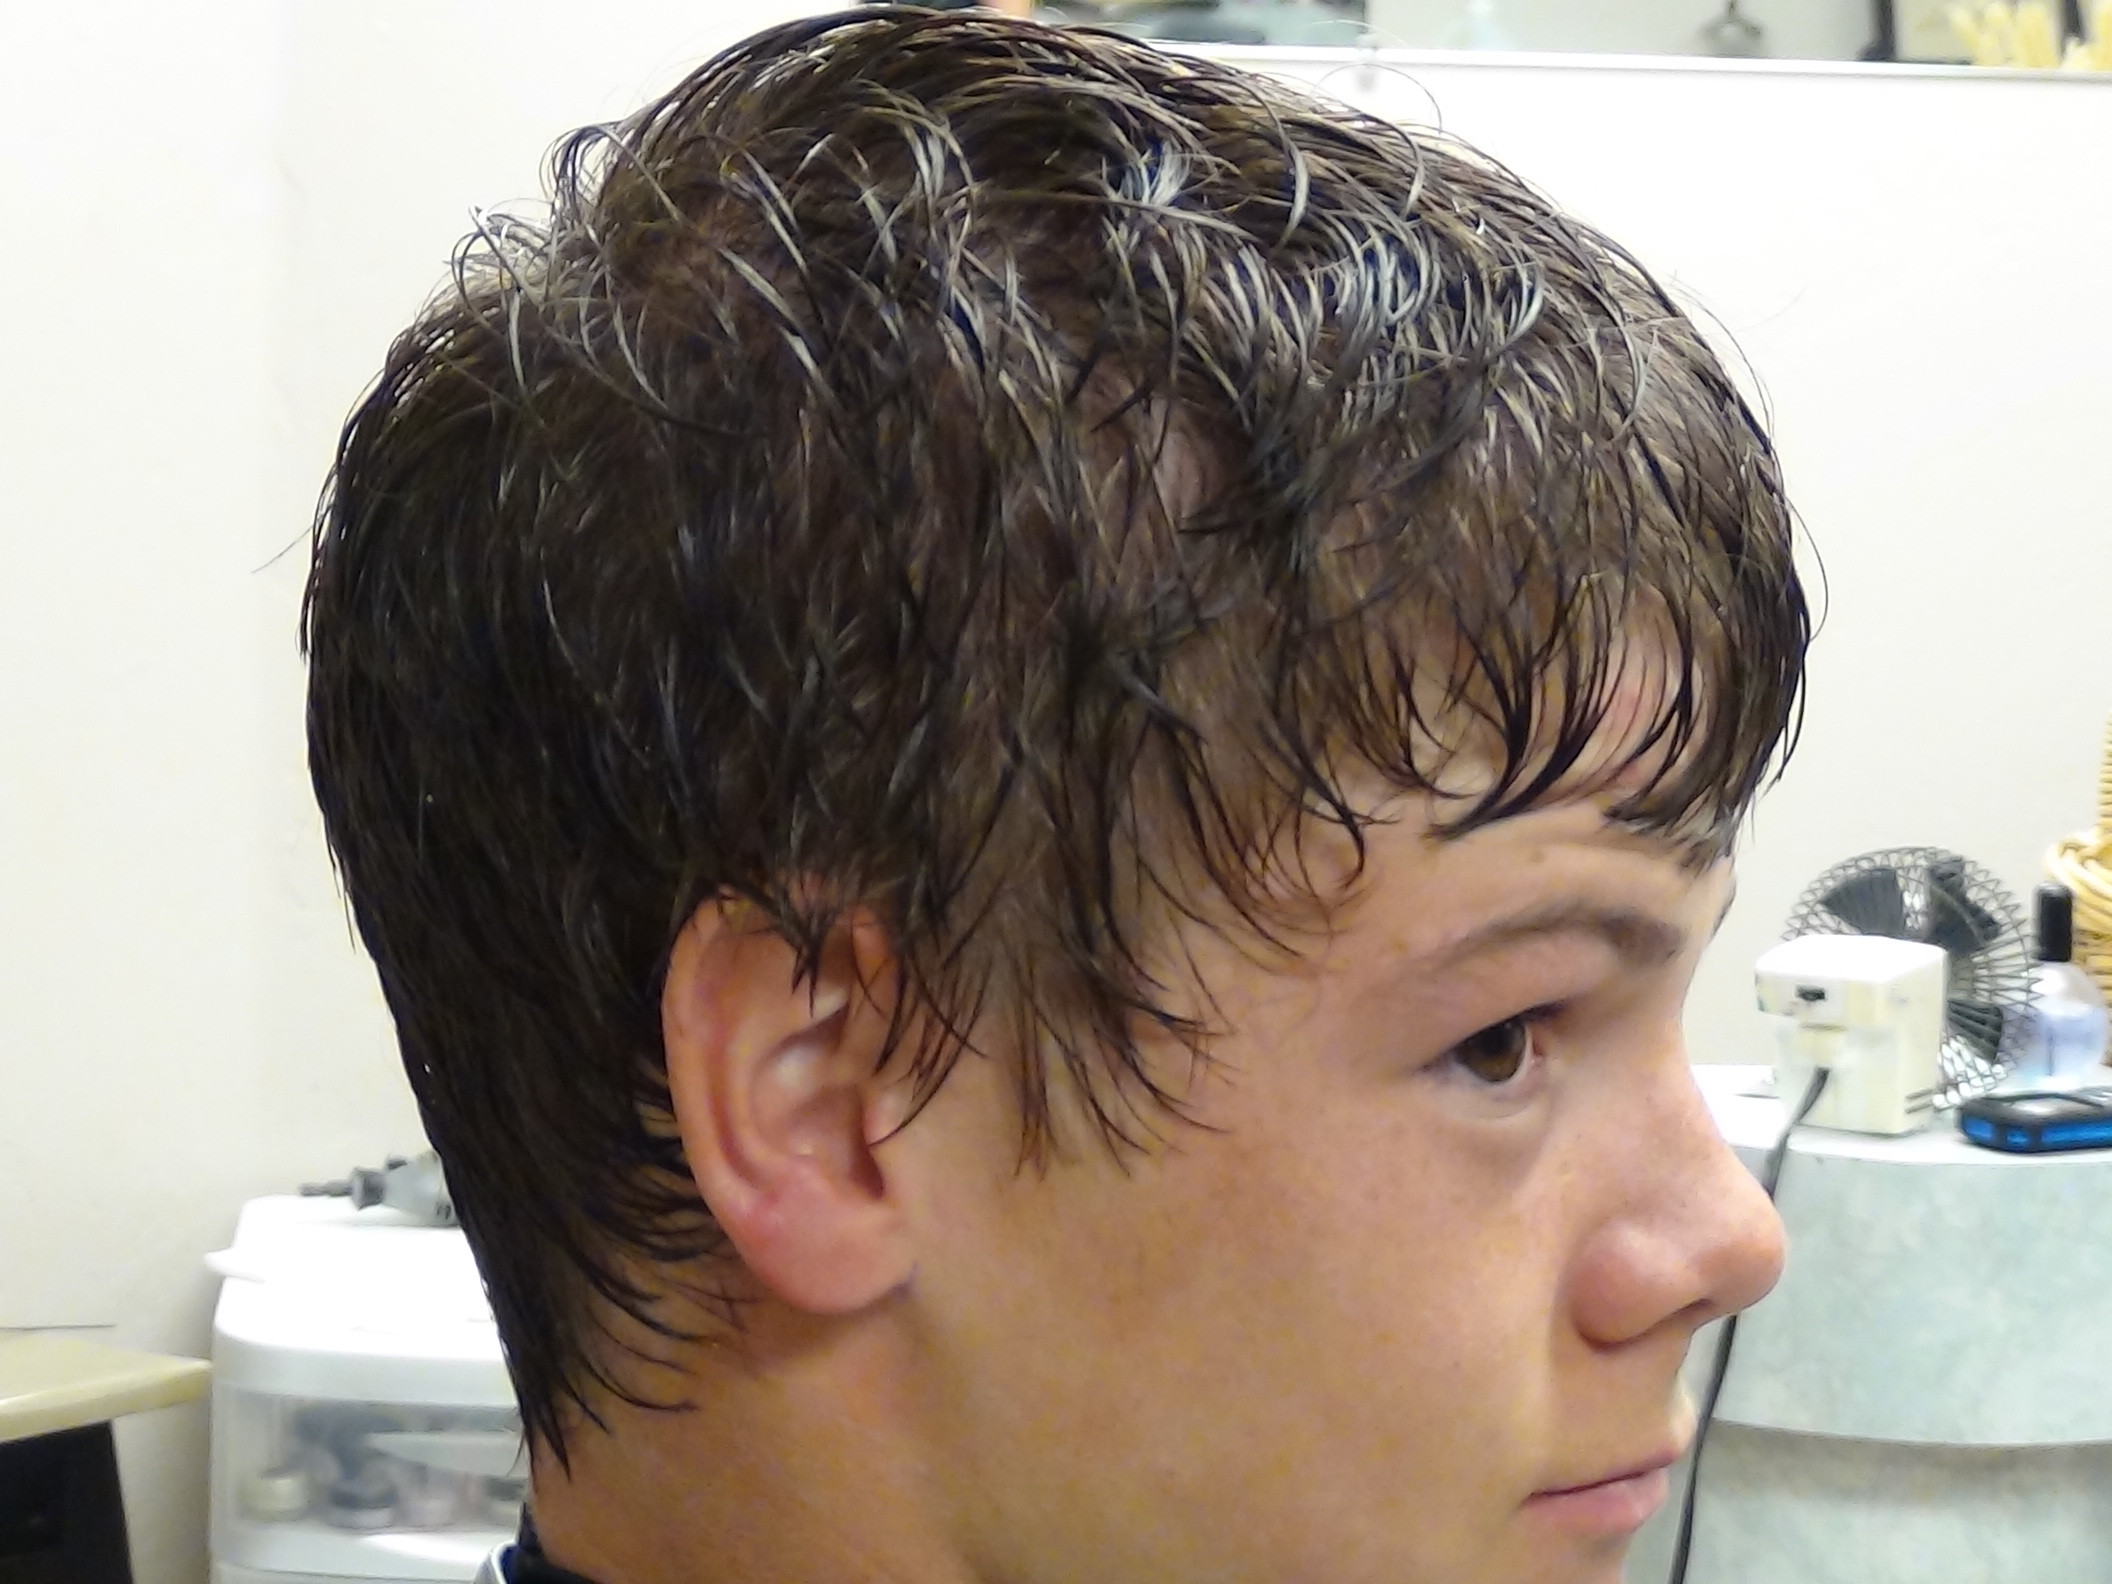 How To Cut Boys Hair
 DSC